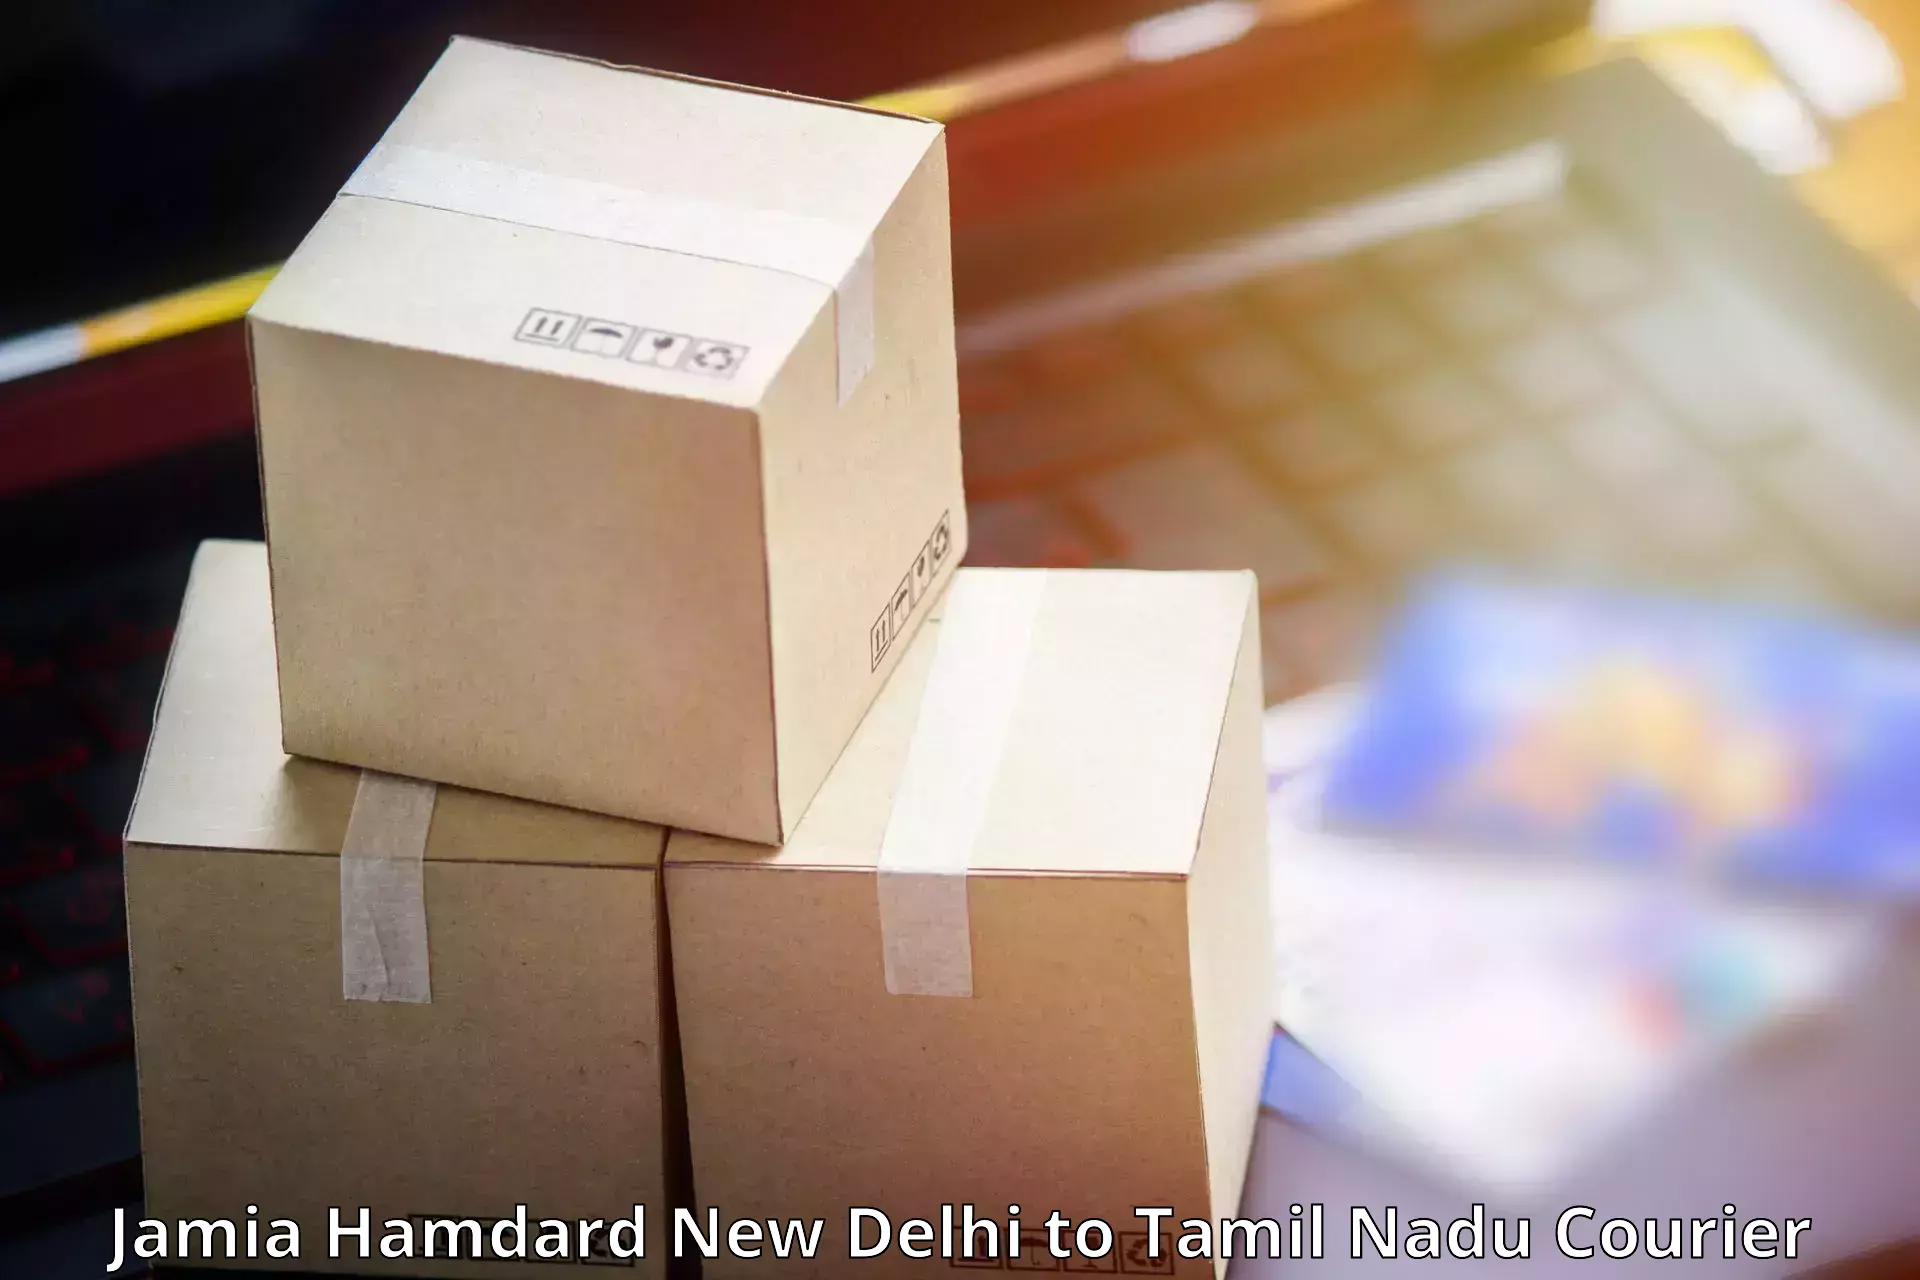 Advanced tracking systems in Jamia Hamdard New Delhi to Tamil Nadu